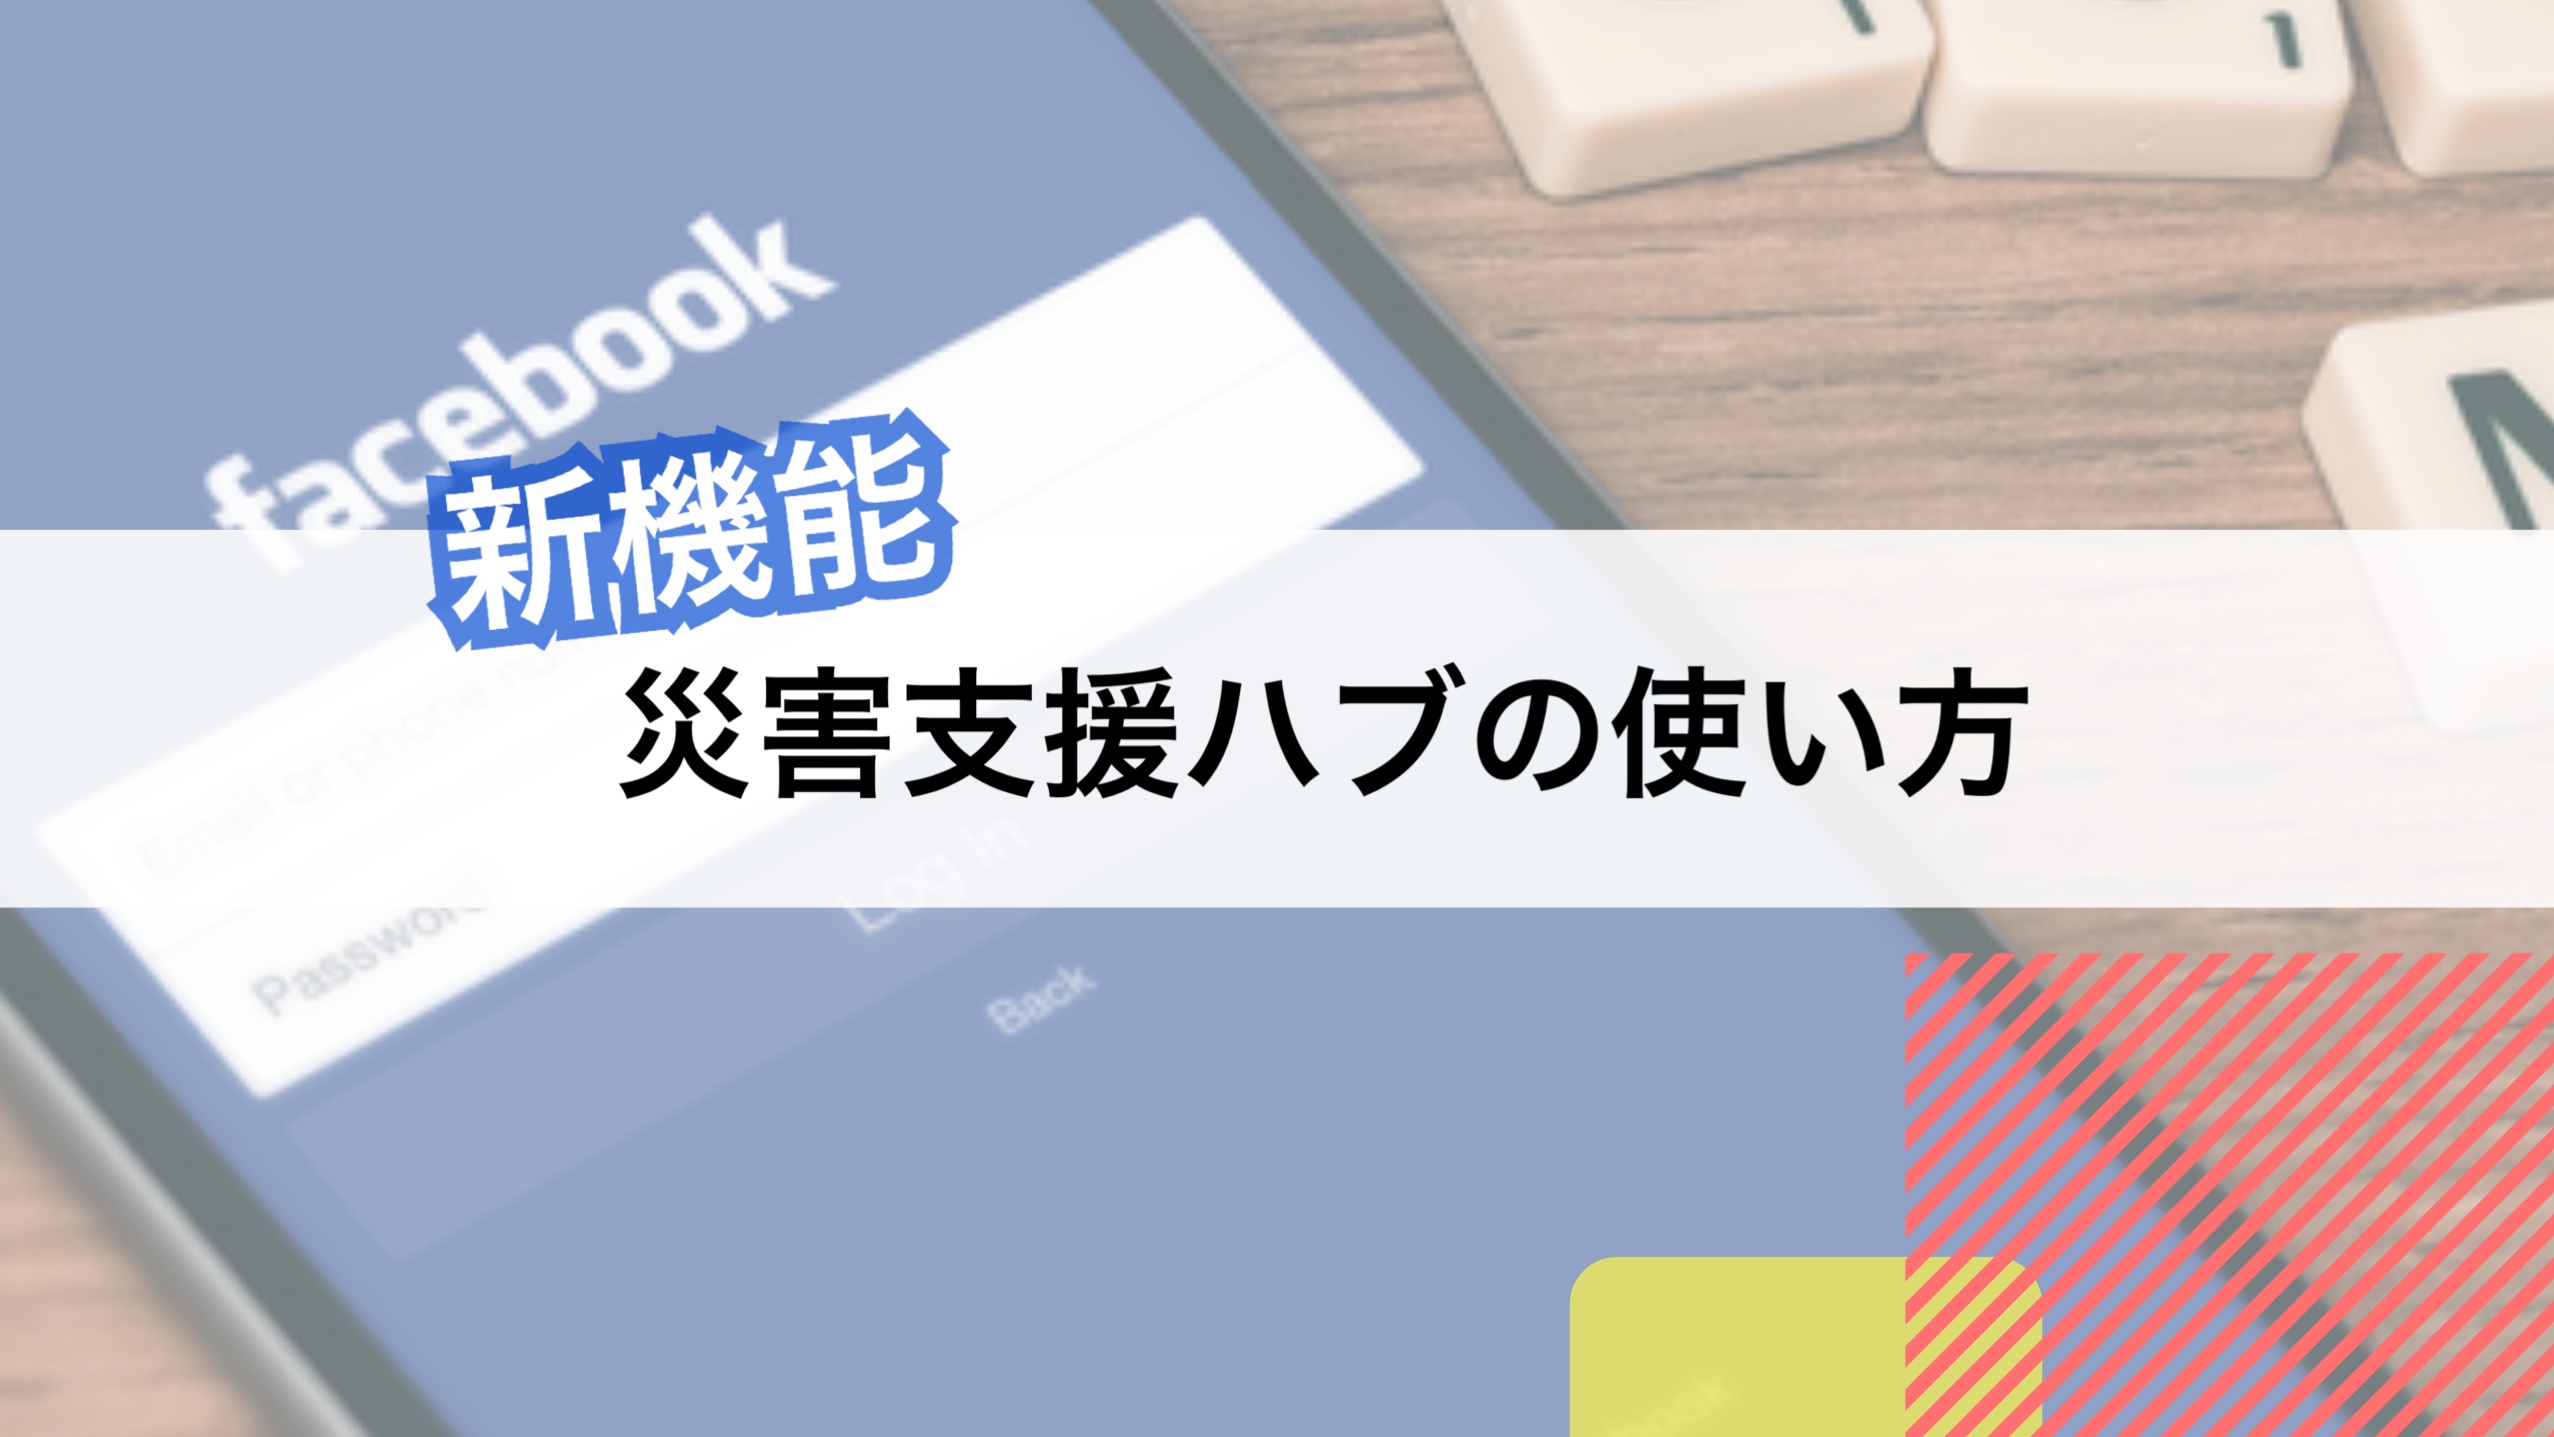 Facebookの新機能 災害支援ハブ の使い方 Saigai Journal 災害ジャーナル